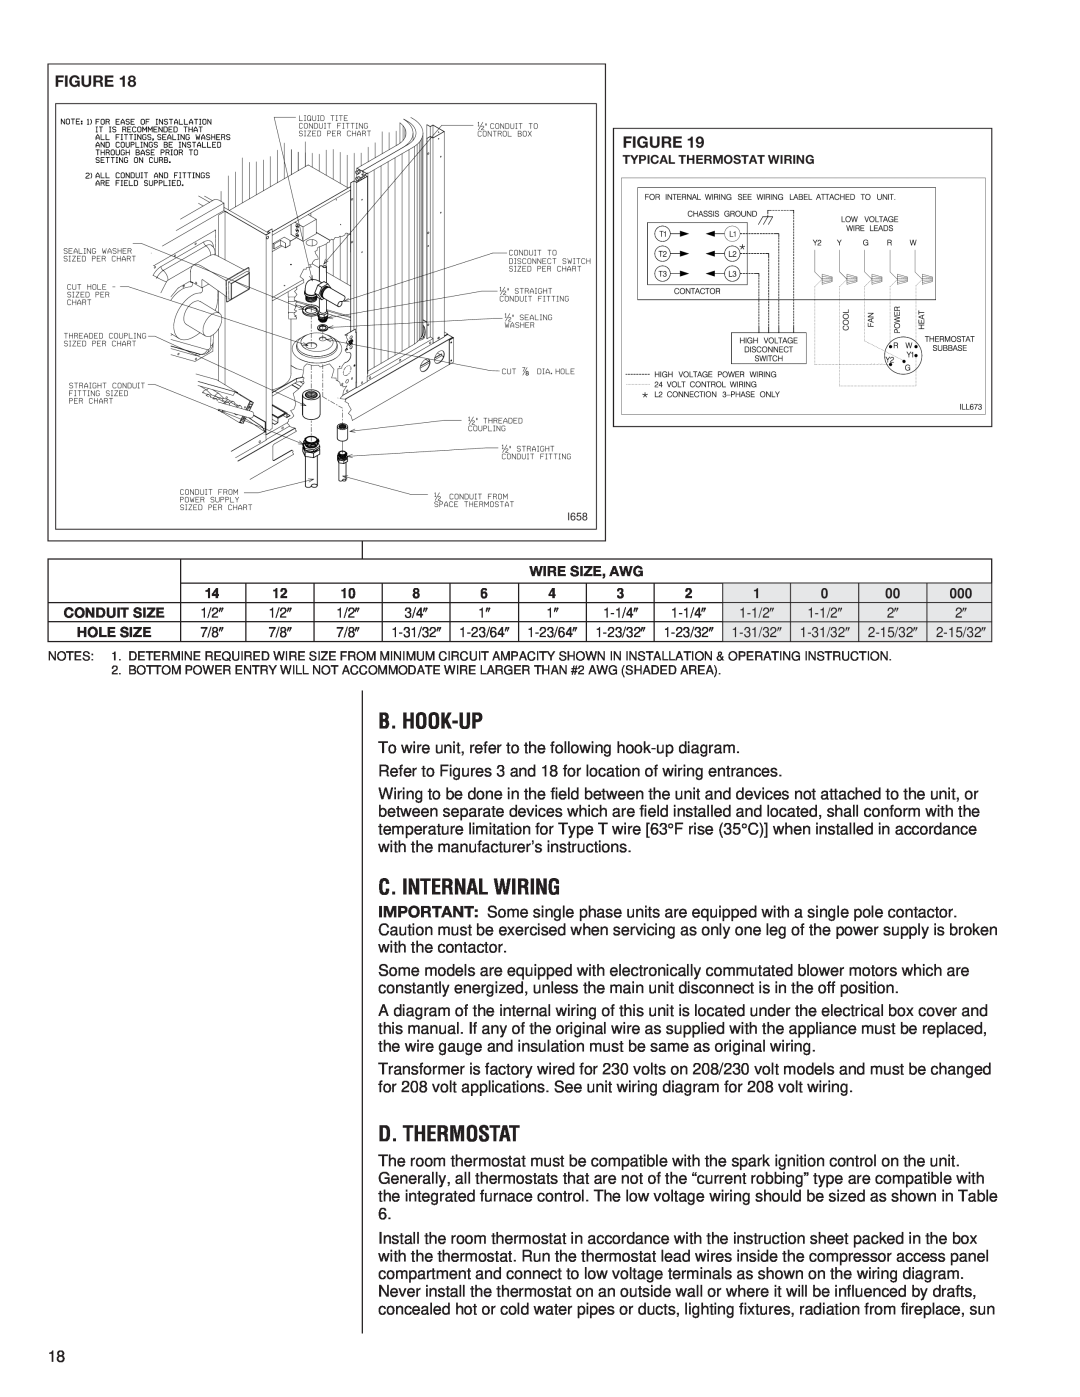 Heat Controller A-13 installation instructions B. Hook-Up, C. Internal Wiring, D. Thermostat 